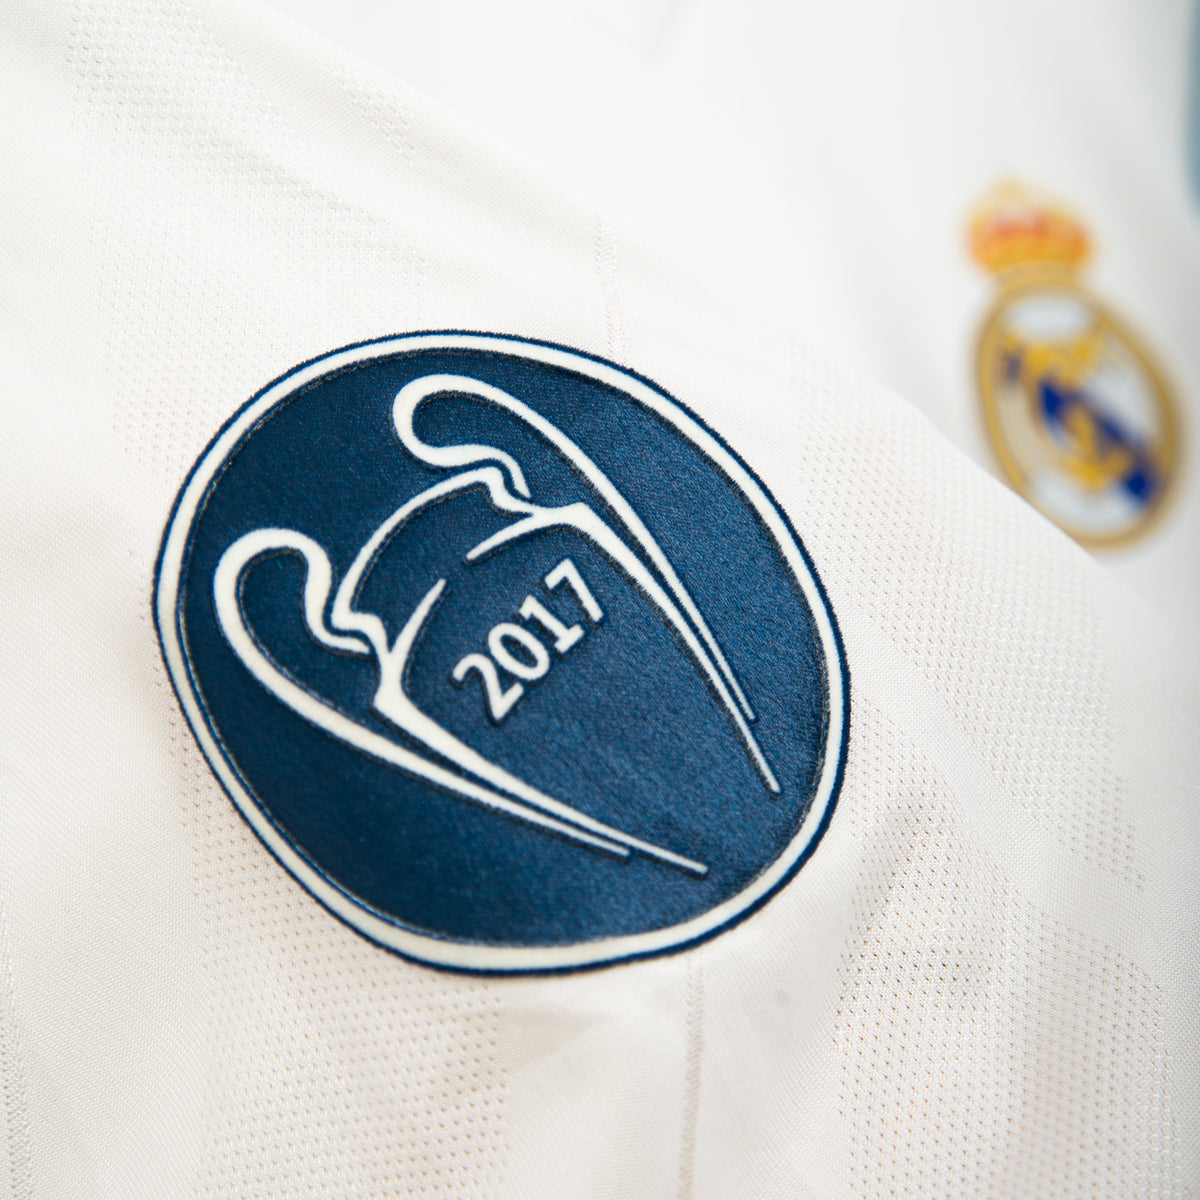 2017-2018 Real Madrid Adidas Home Shirt #7 Cristiano Ronaldo - Player Version